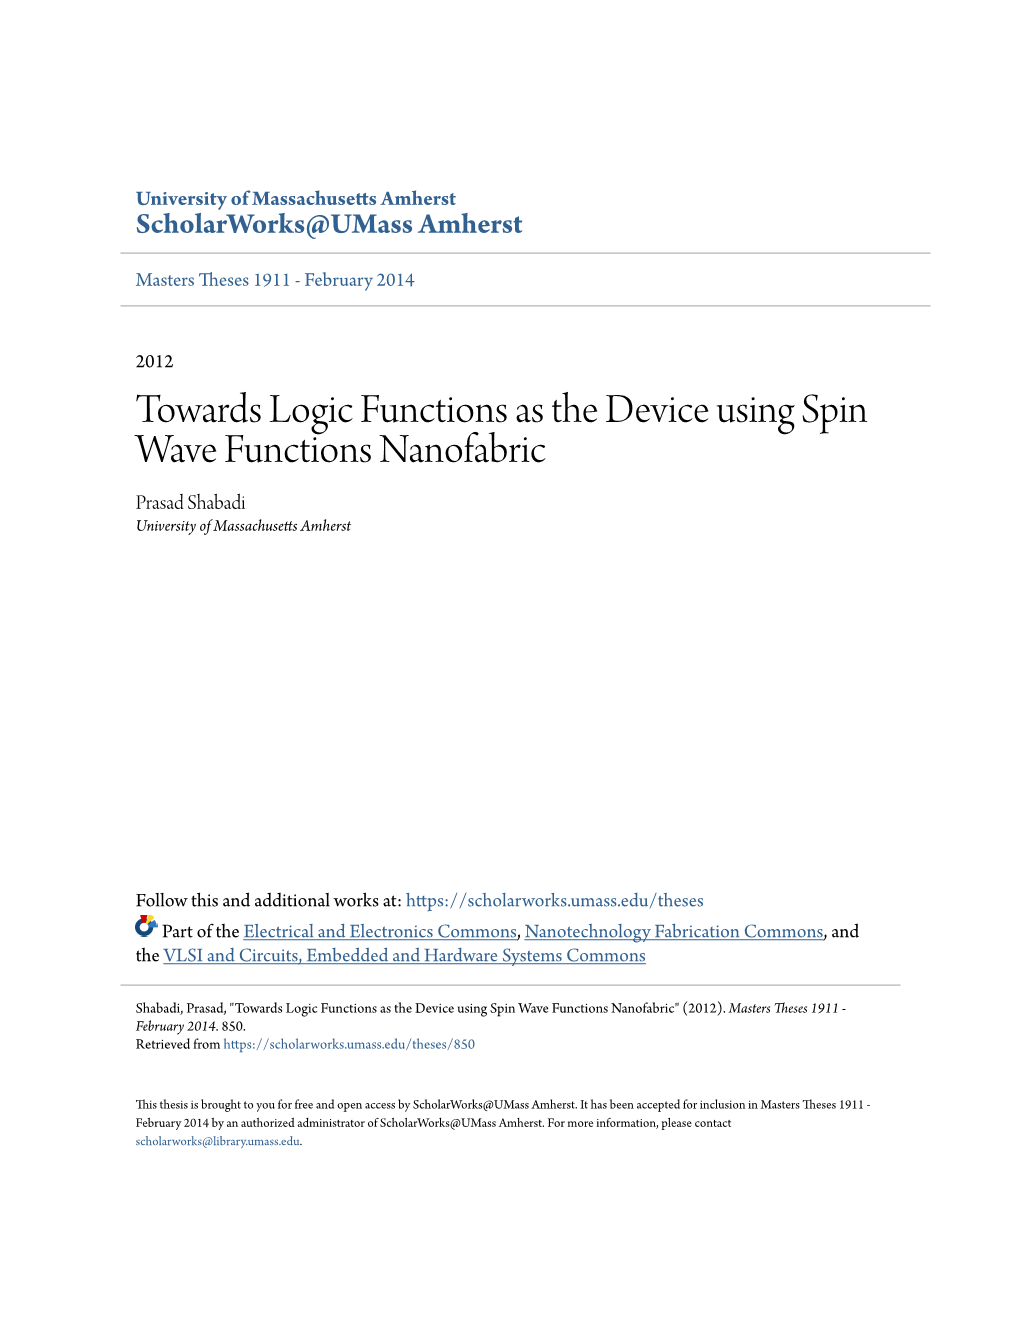 Towards Logic Functions As the Device Using Spin Wave Functions Nanofabric Prasad Shabadi University of Massachusetts Amherst